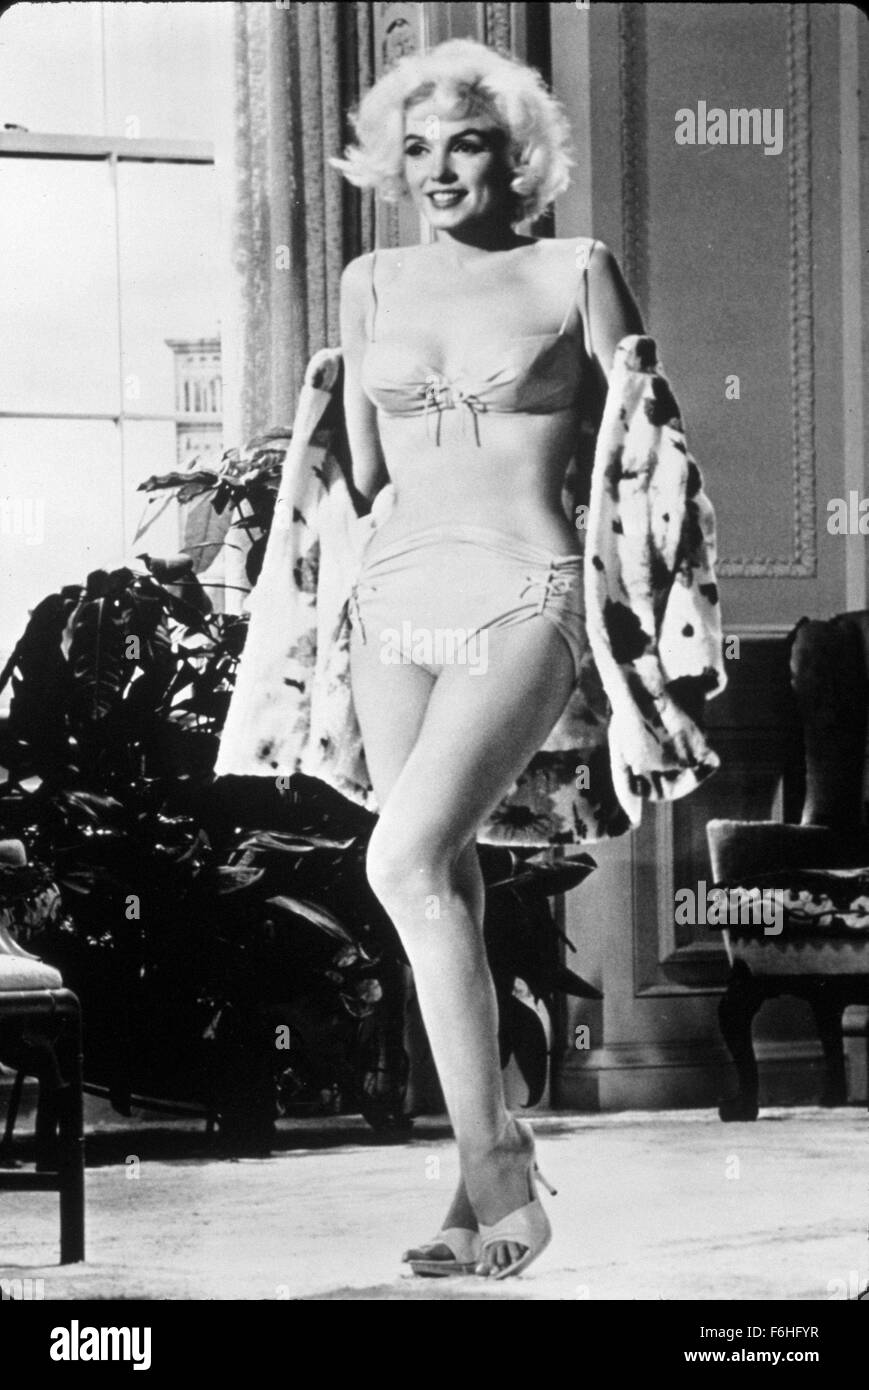 Marilyn monroe bikini Black and White Stock Photos & Images - Alamy